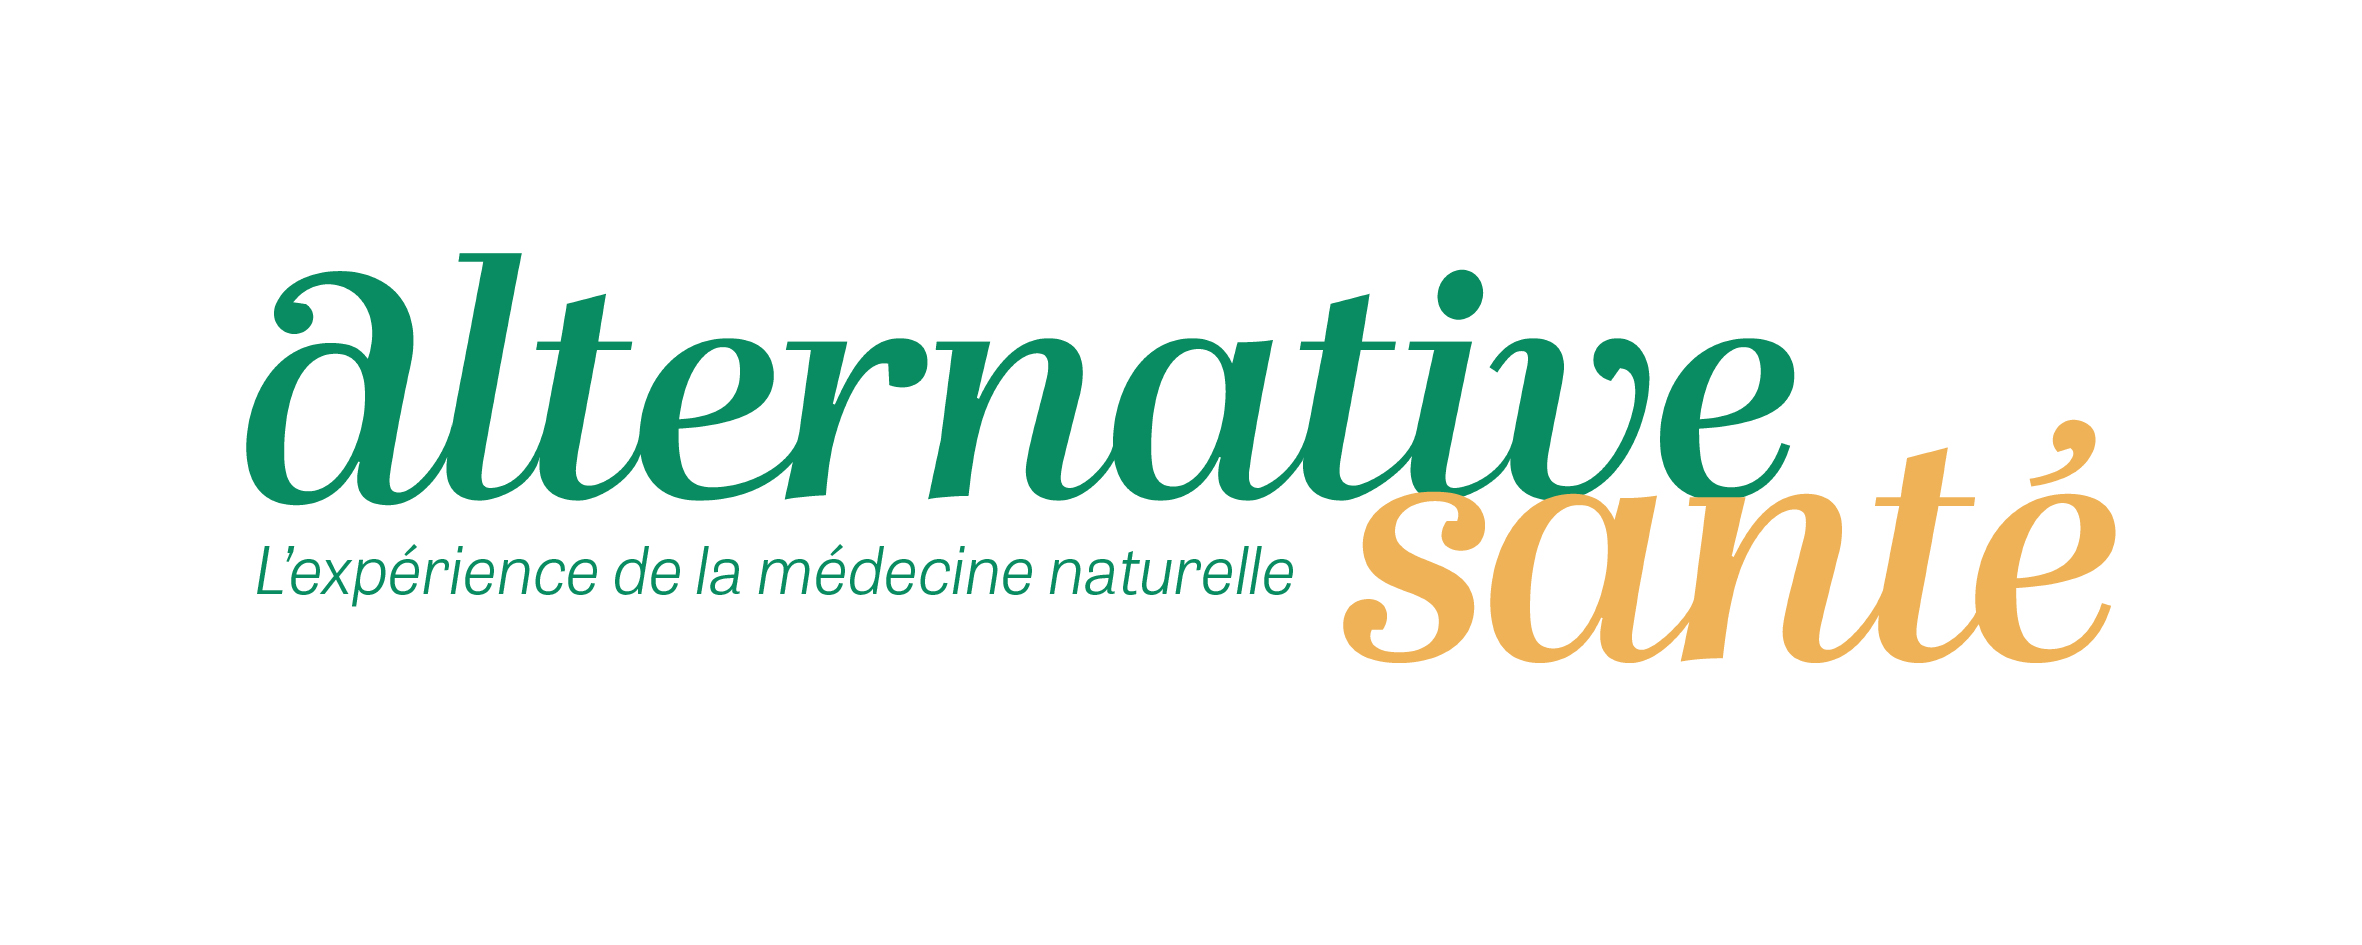 Alternative Sante : l'expérience de la médecine naturelle